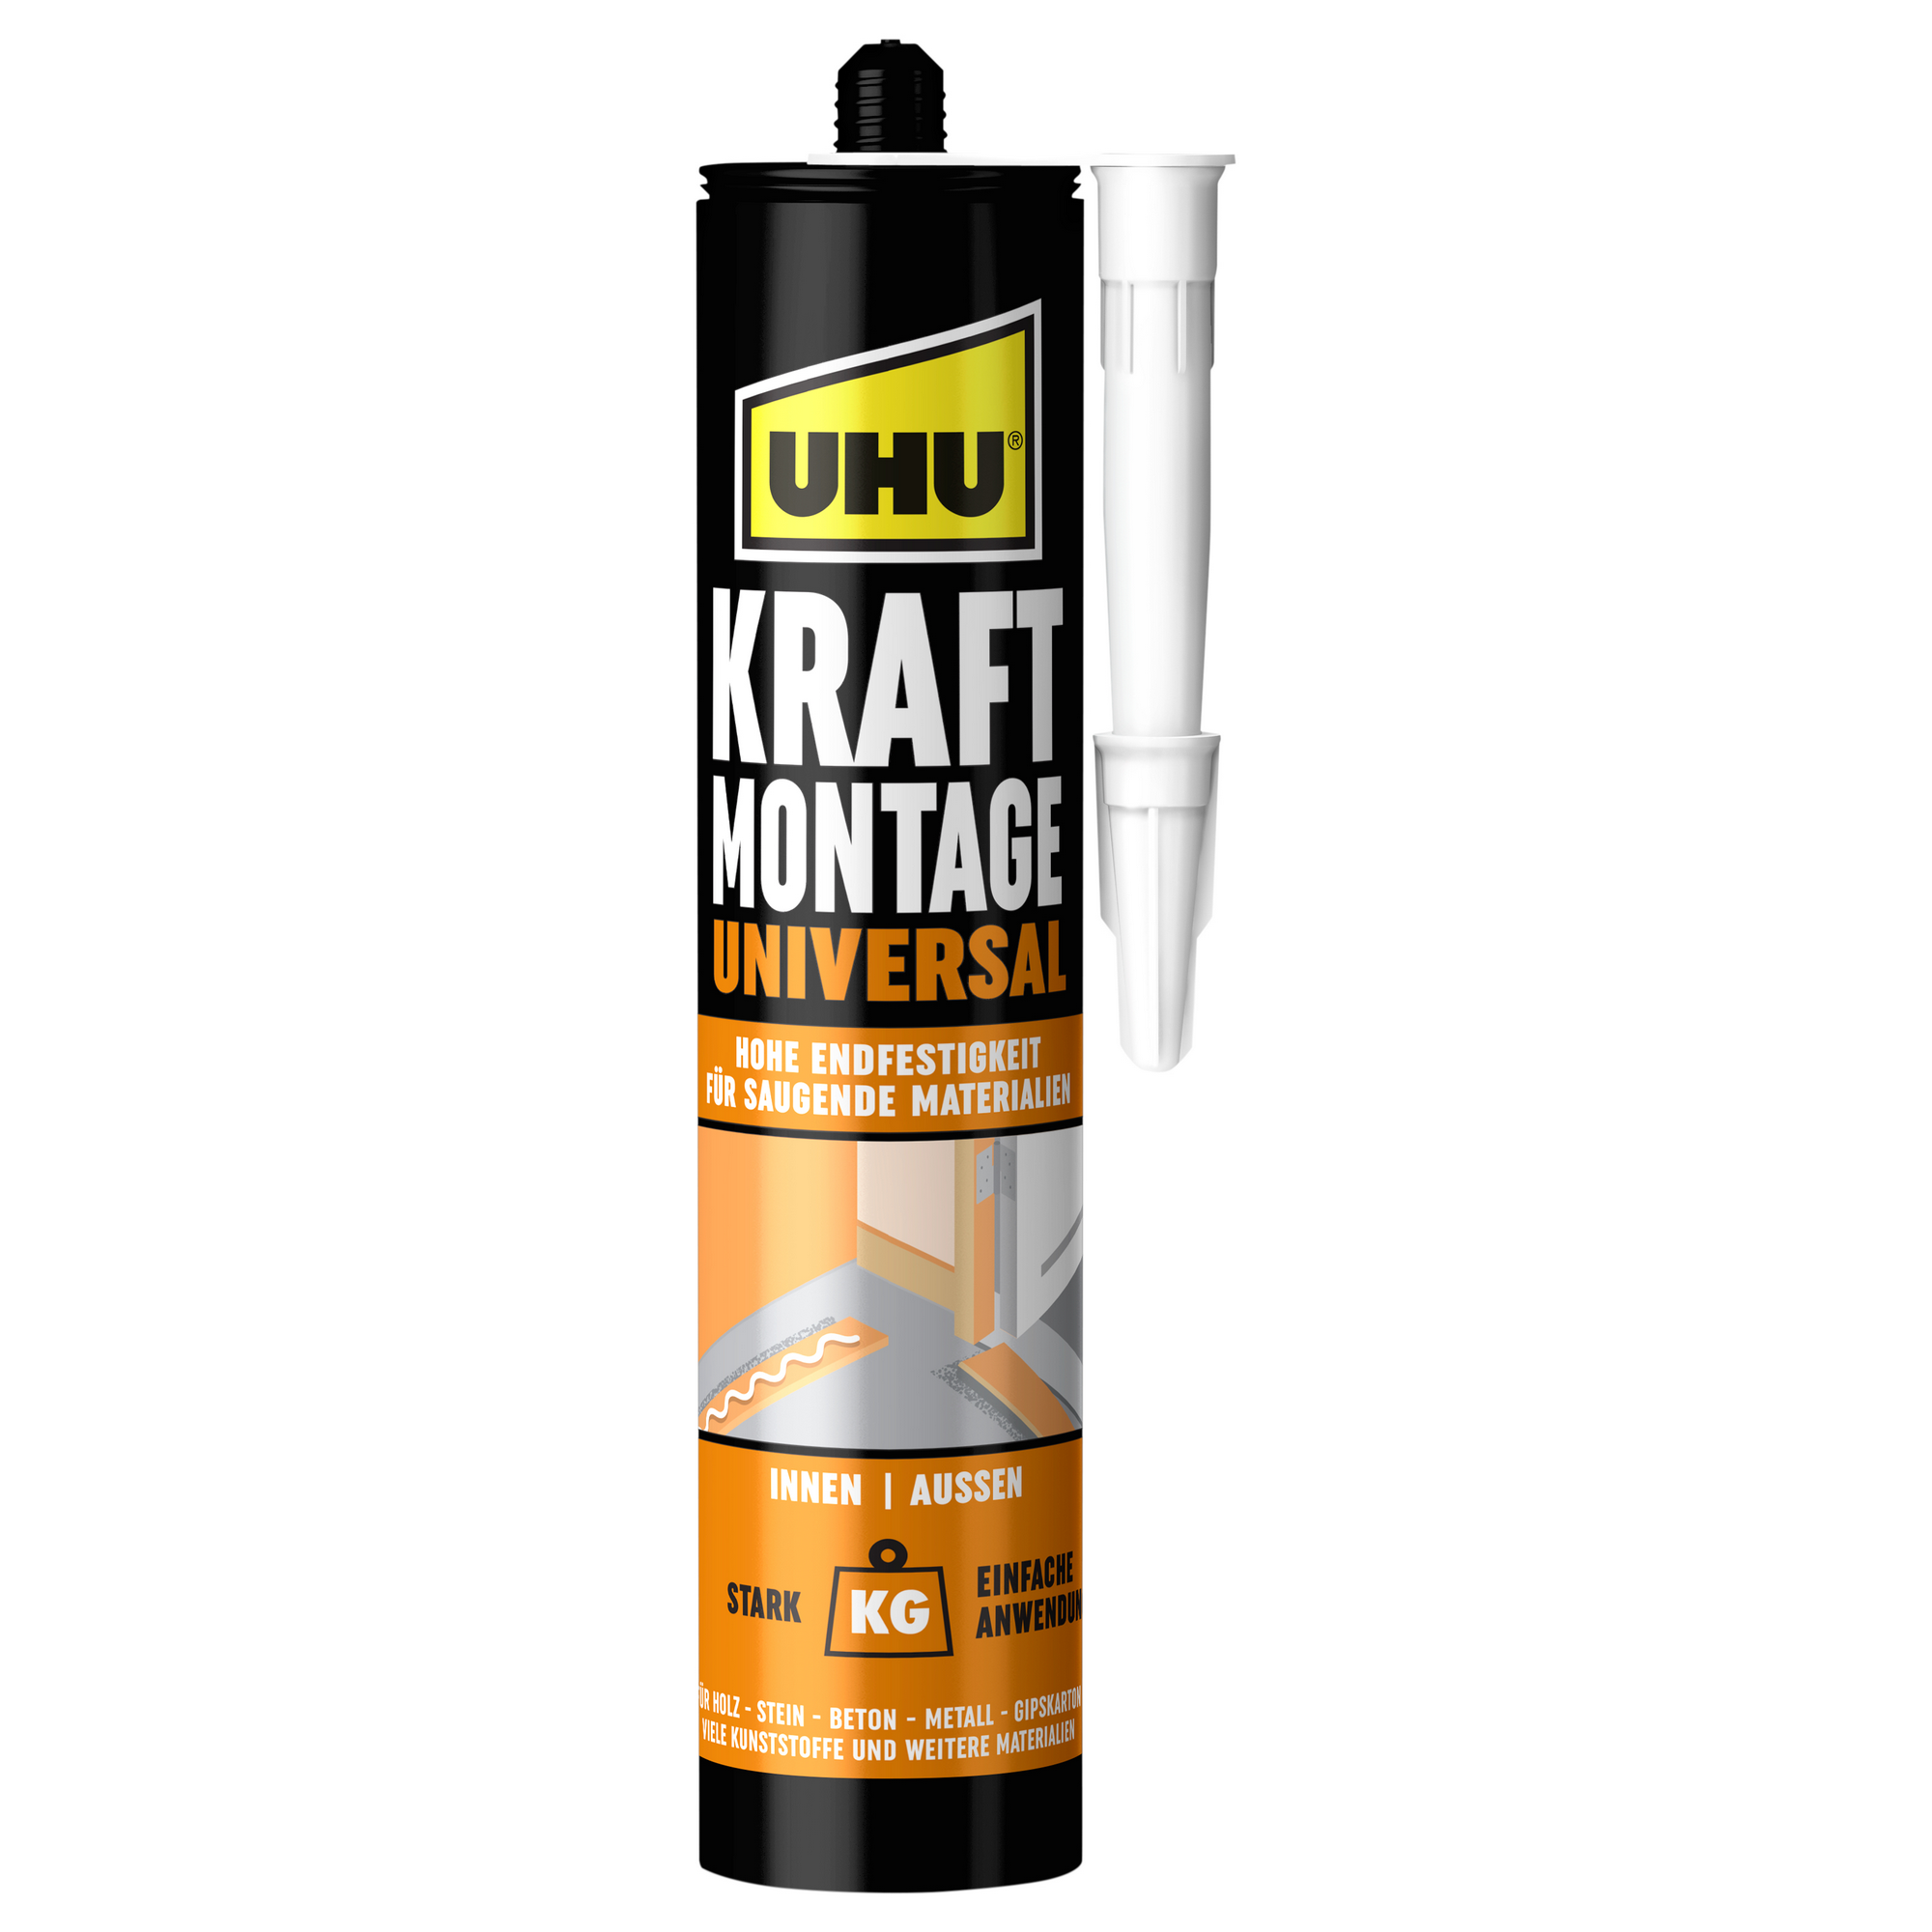 Montagekleber 'Kraft Montage Universal' 470 g + product picture